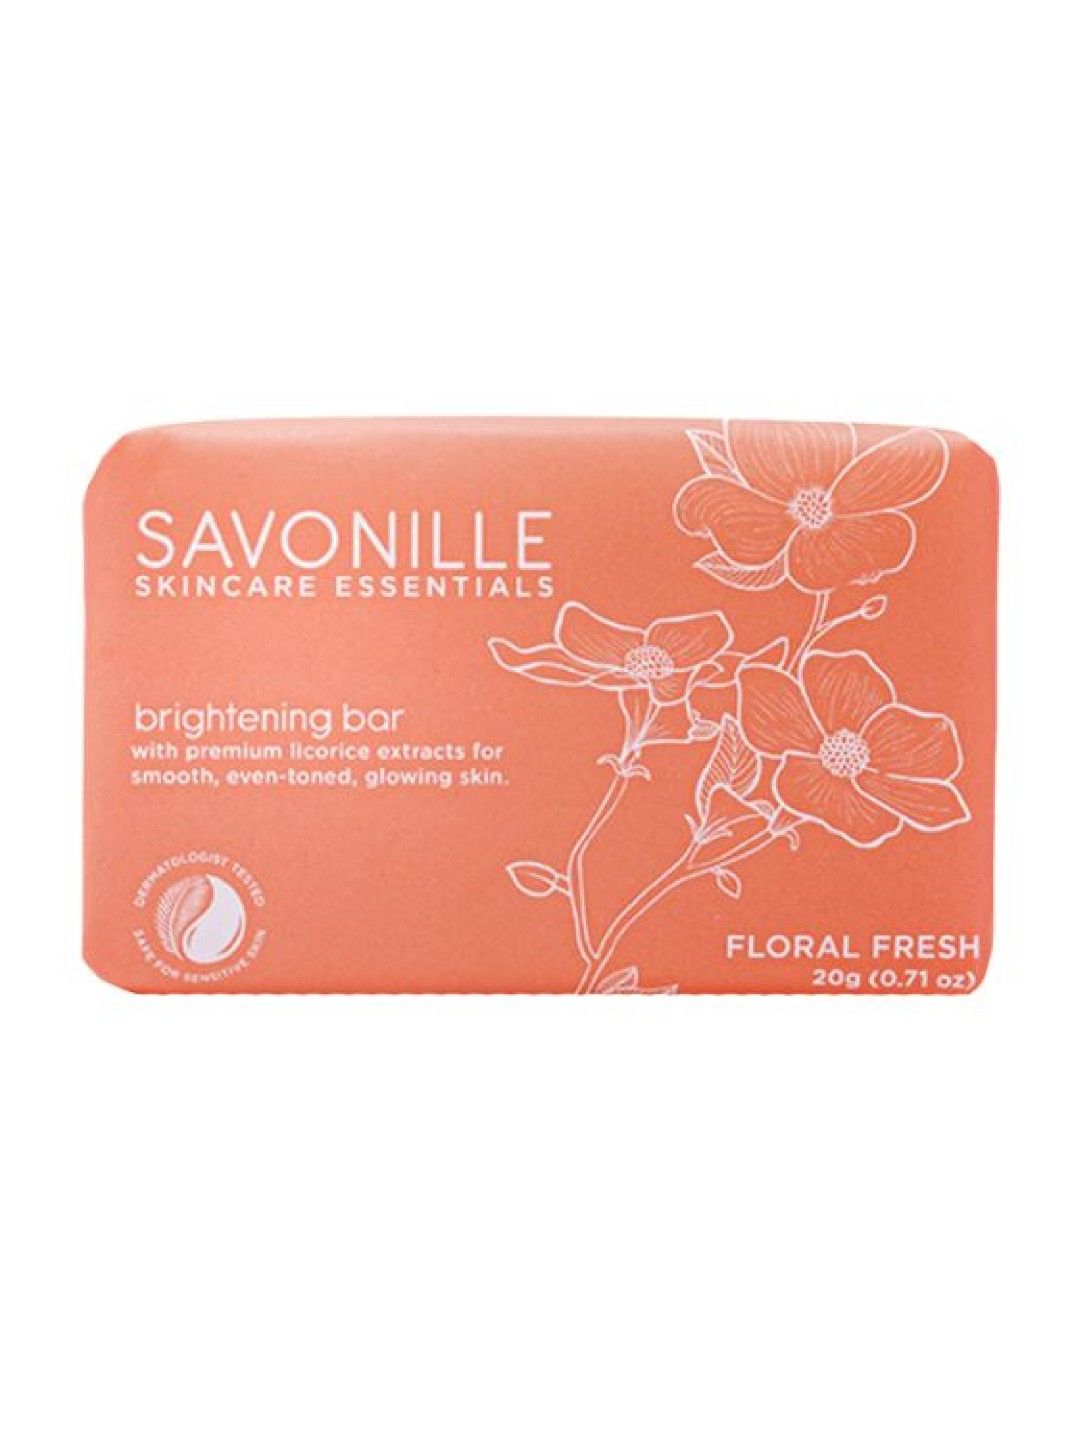 Savonille Skincare Essentials Floral Fresh Travel Trio (No Color- Image 4)